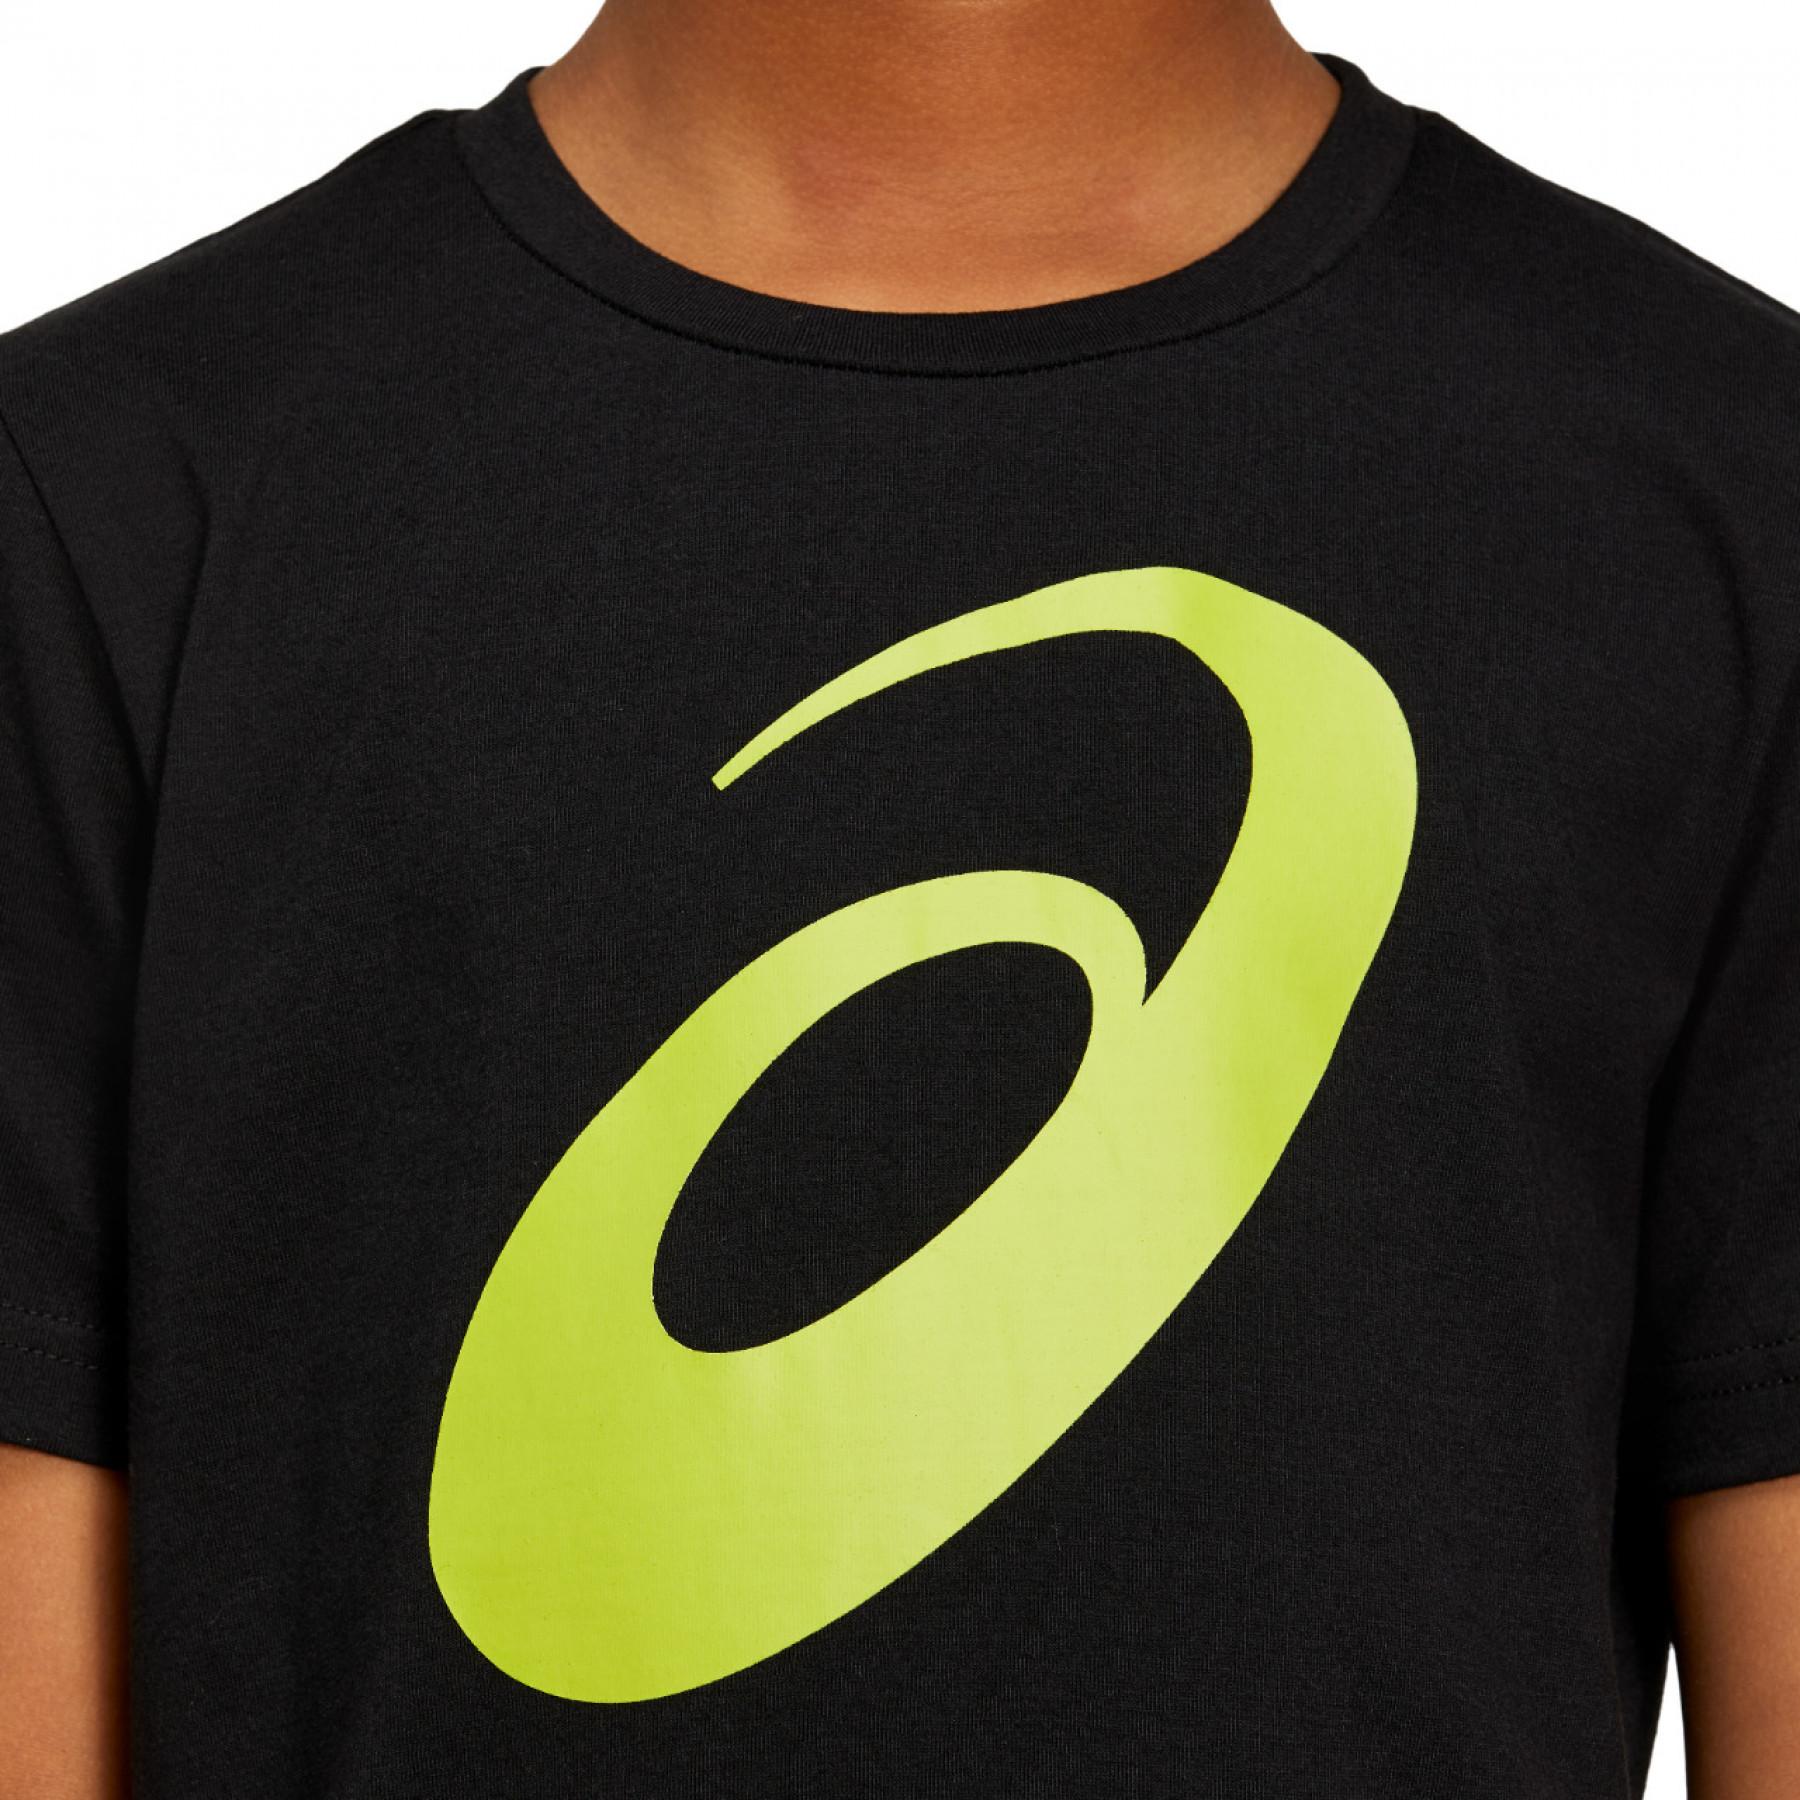 T-shirt enfant Asics U Big Spiral